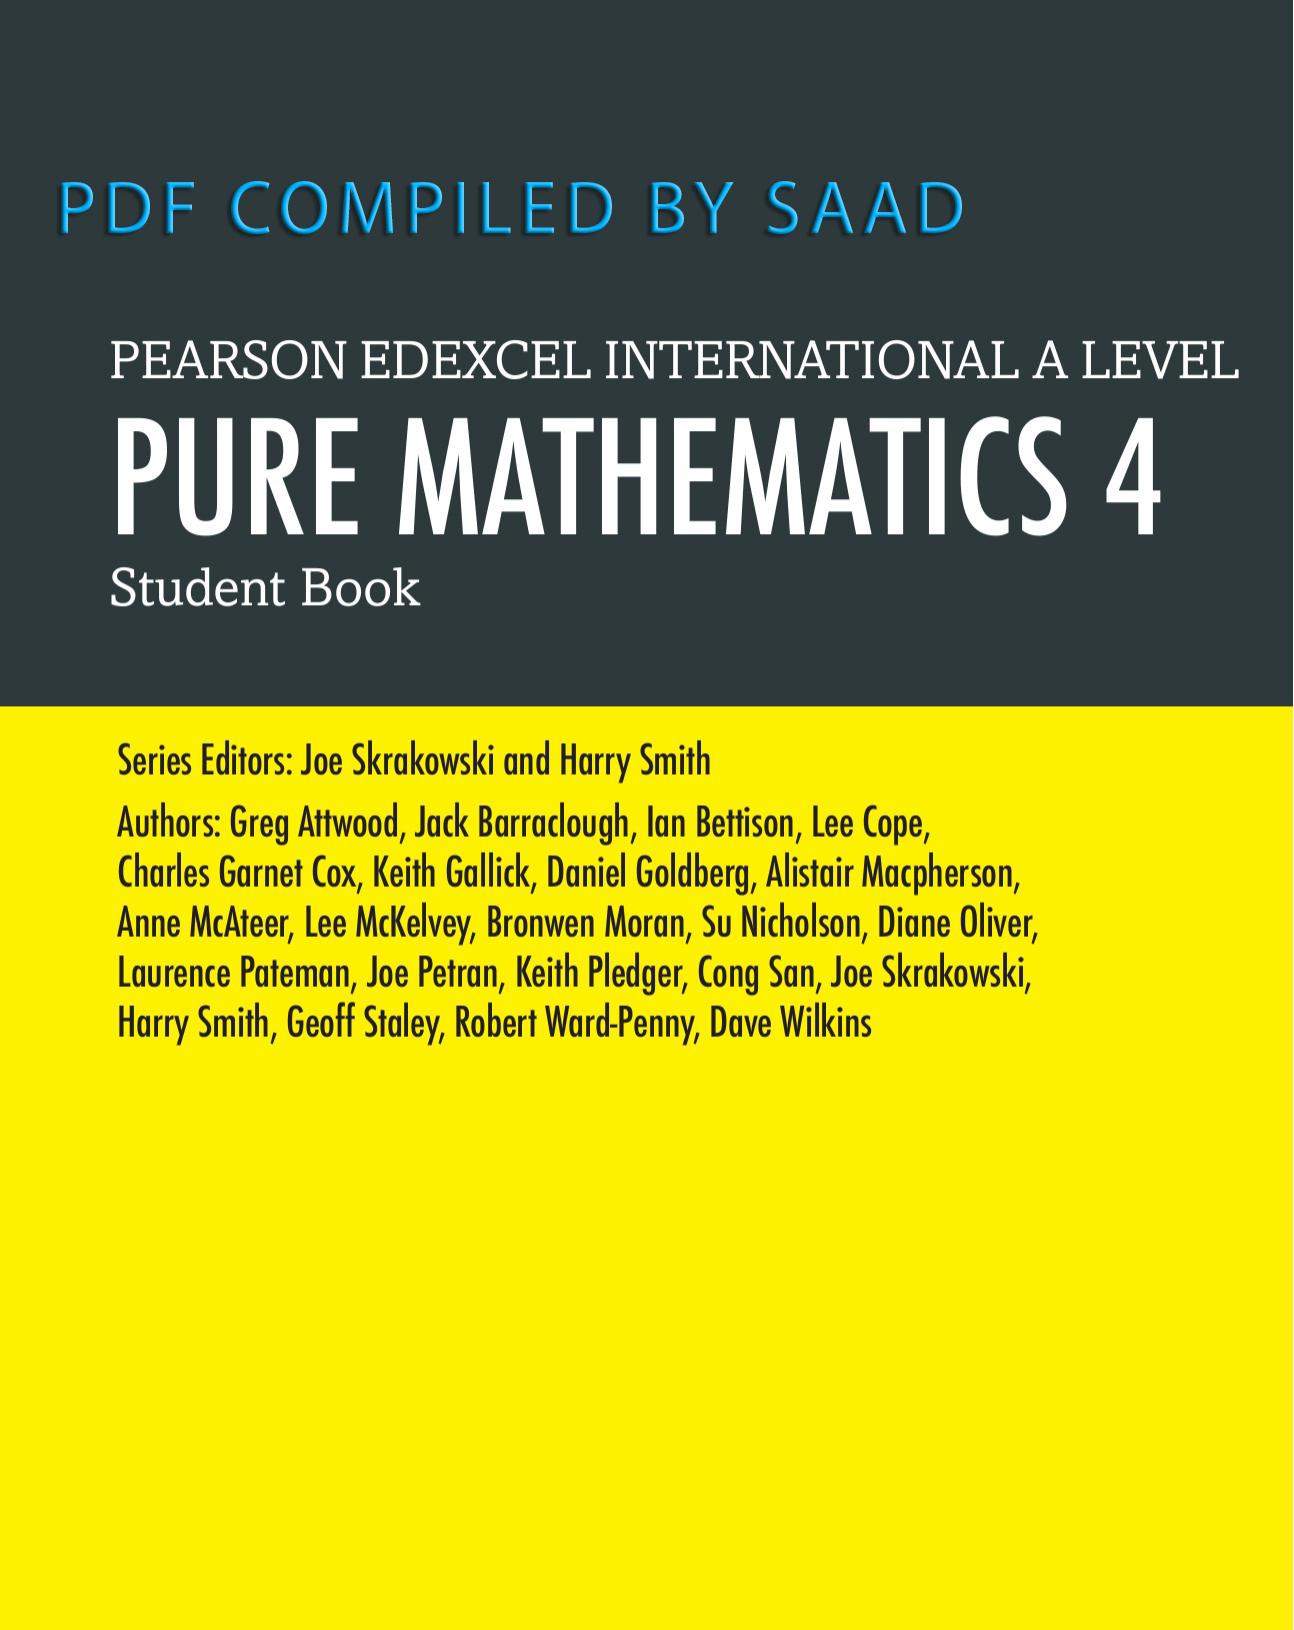 Pearson Edexcel International a Level: Student Book. Pure Mathematics 4